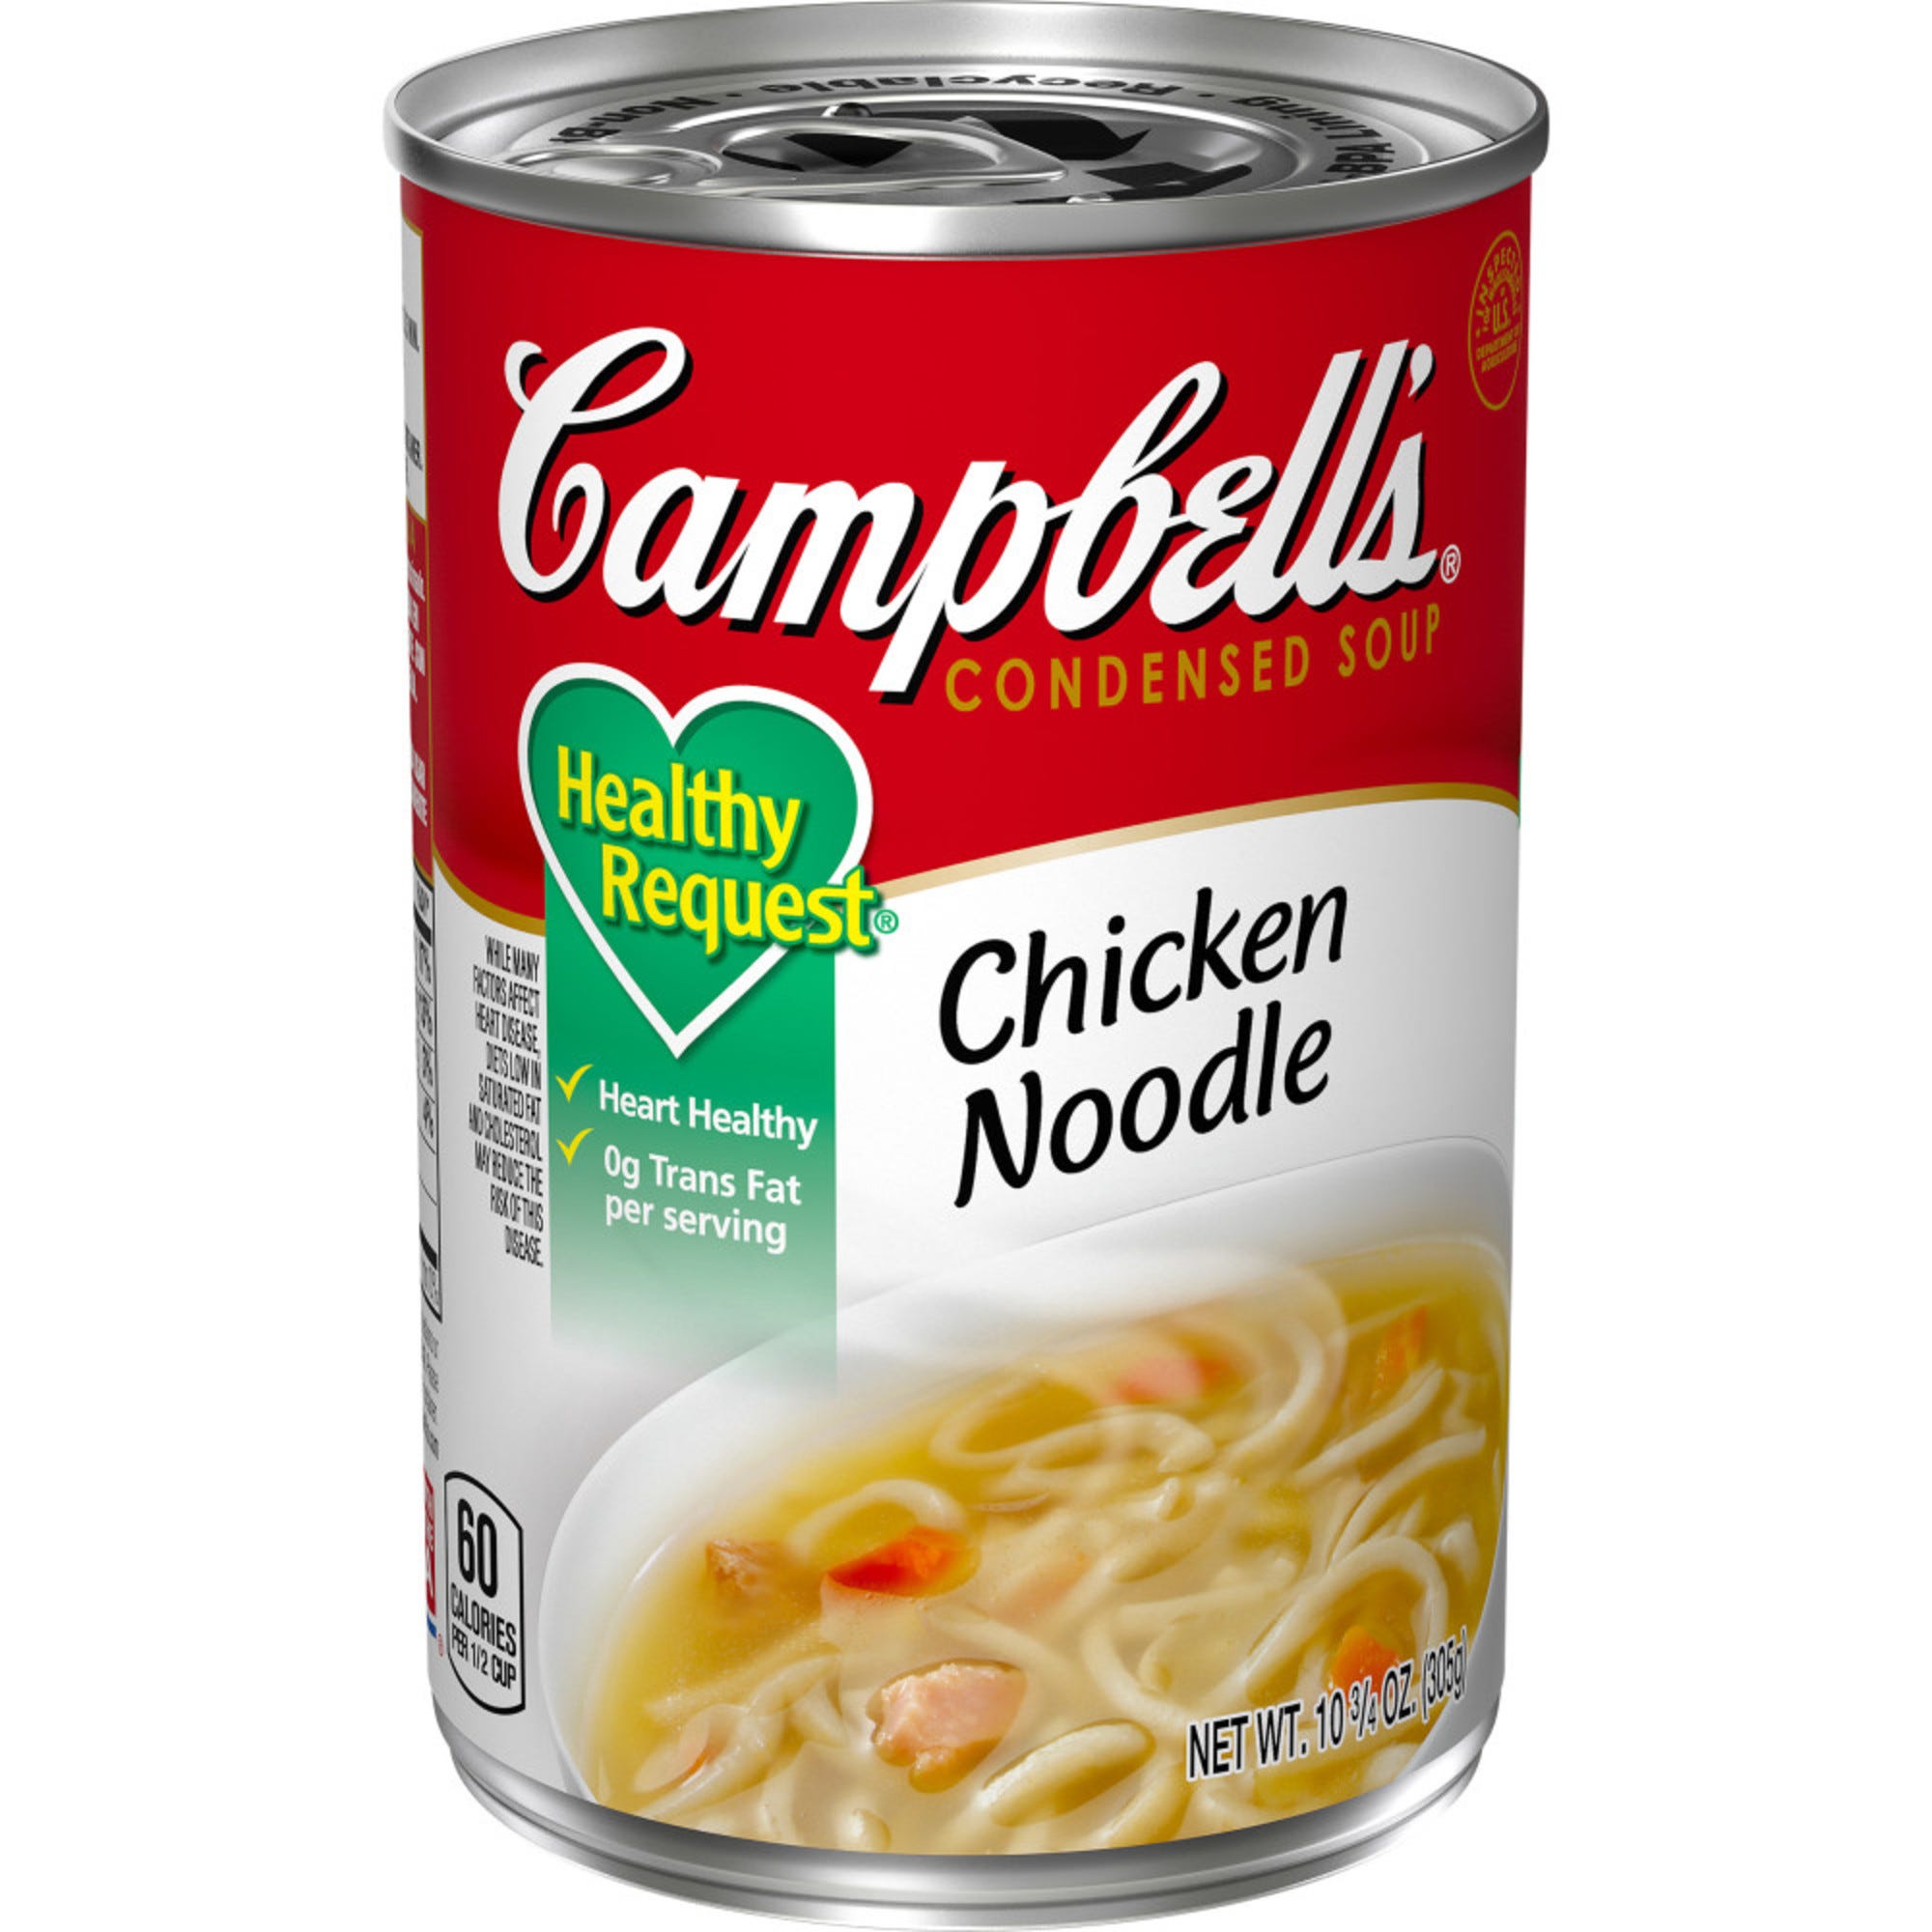 Campbell'sCondensedHealthy RequestChicken Noodle Soup - 10.75 oz